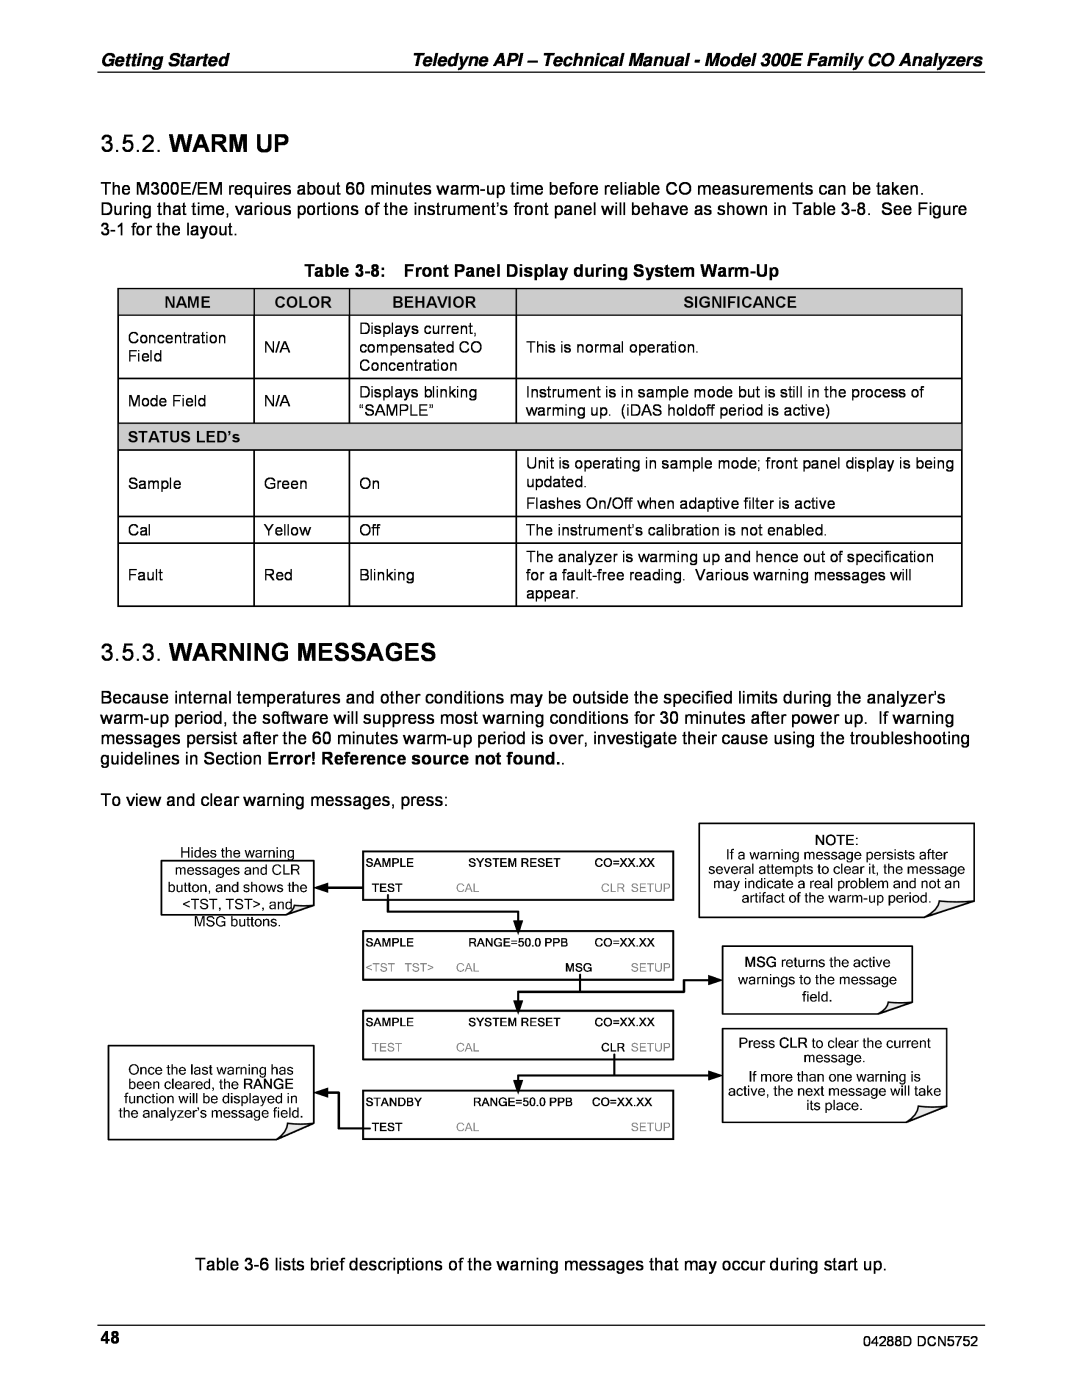 Teledyne M300EM operation manual Warm Up, Warning Messages 